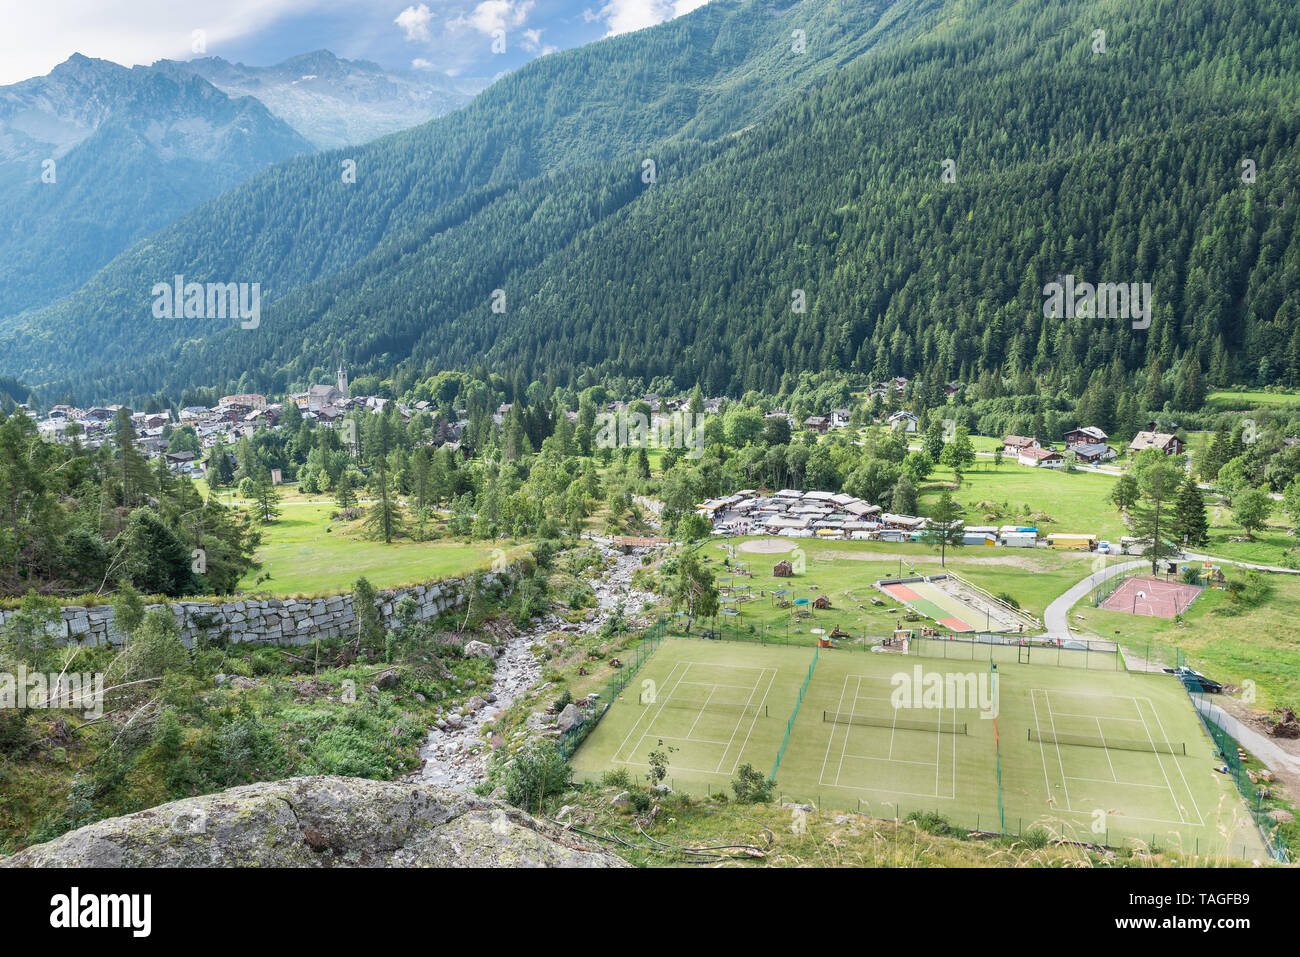 Macugnaga, Italy. Alpine village with some recreational facilities Stock Photo